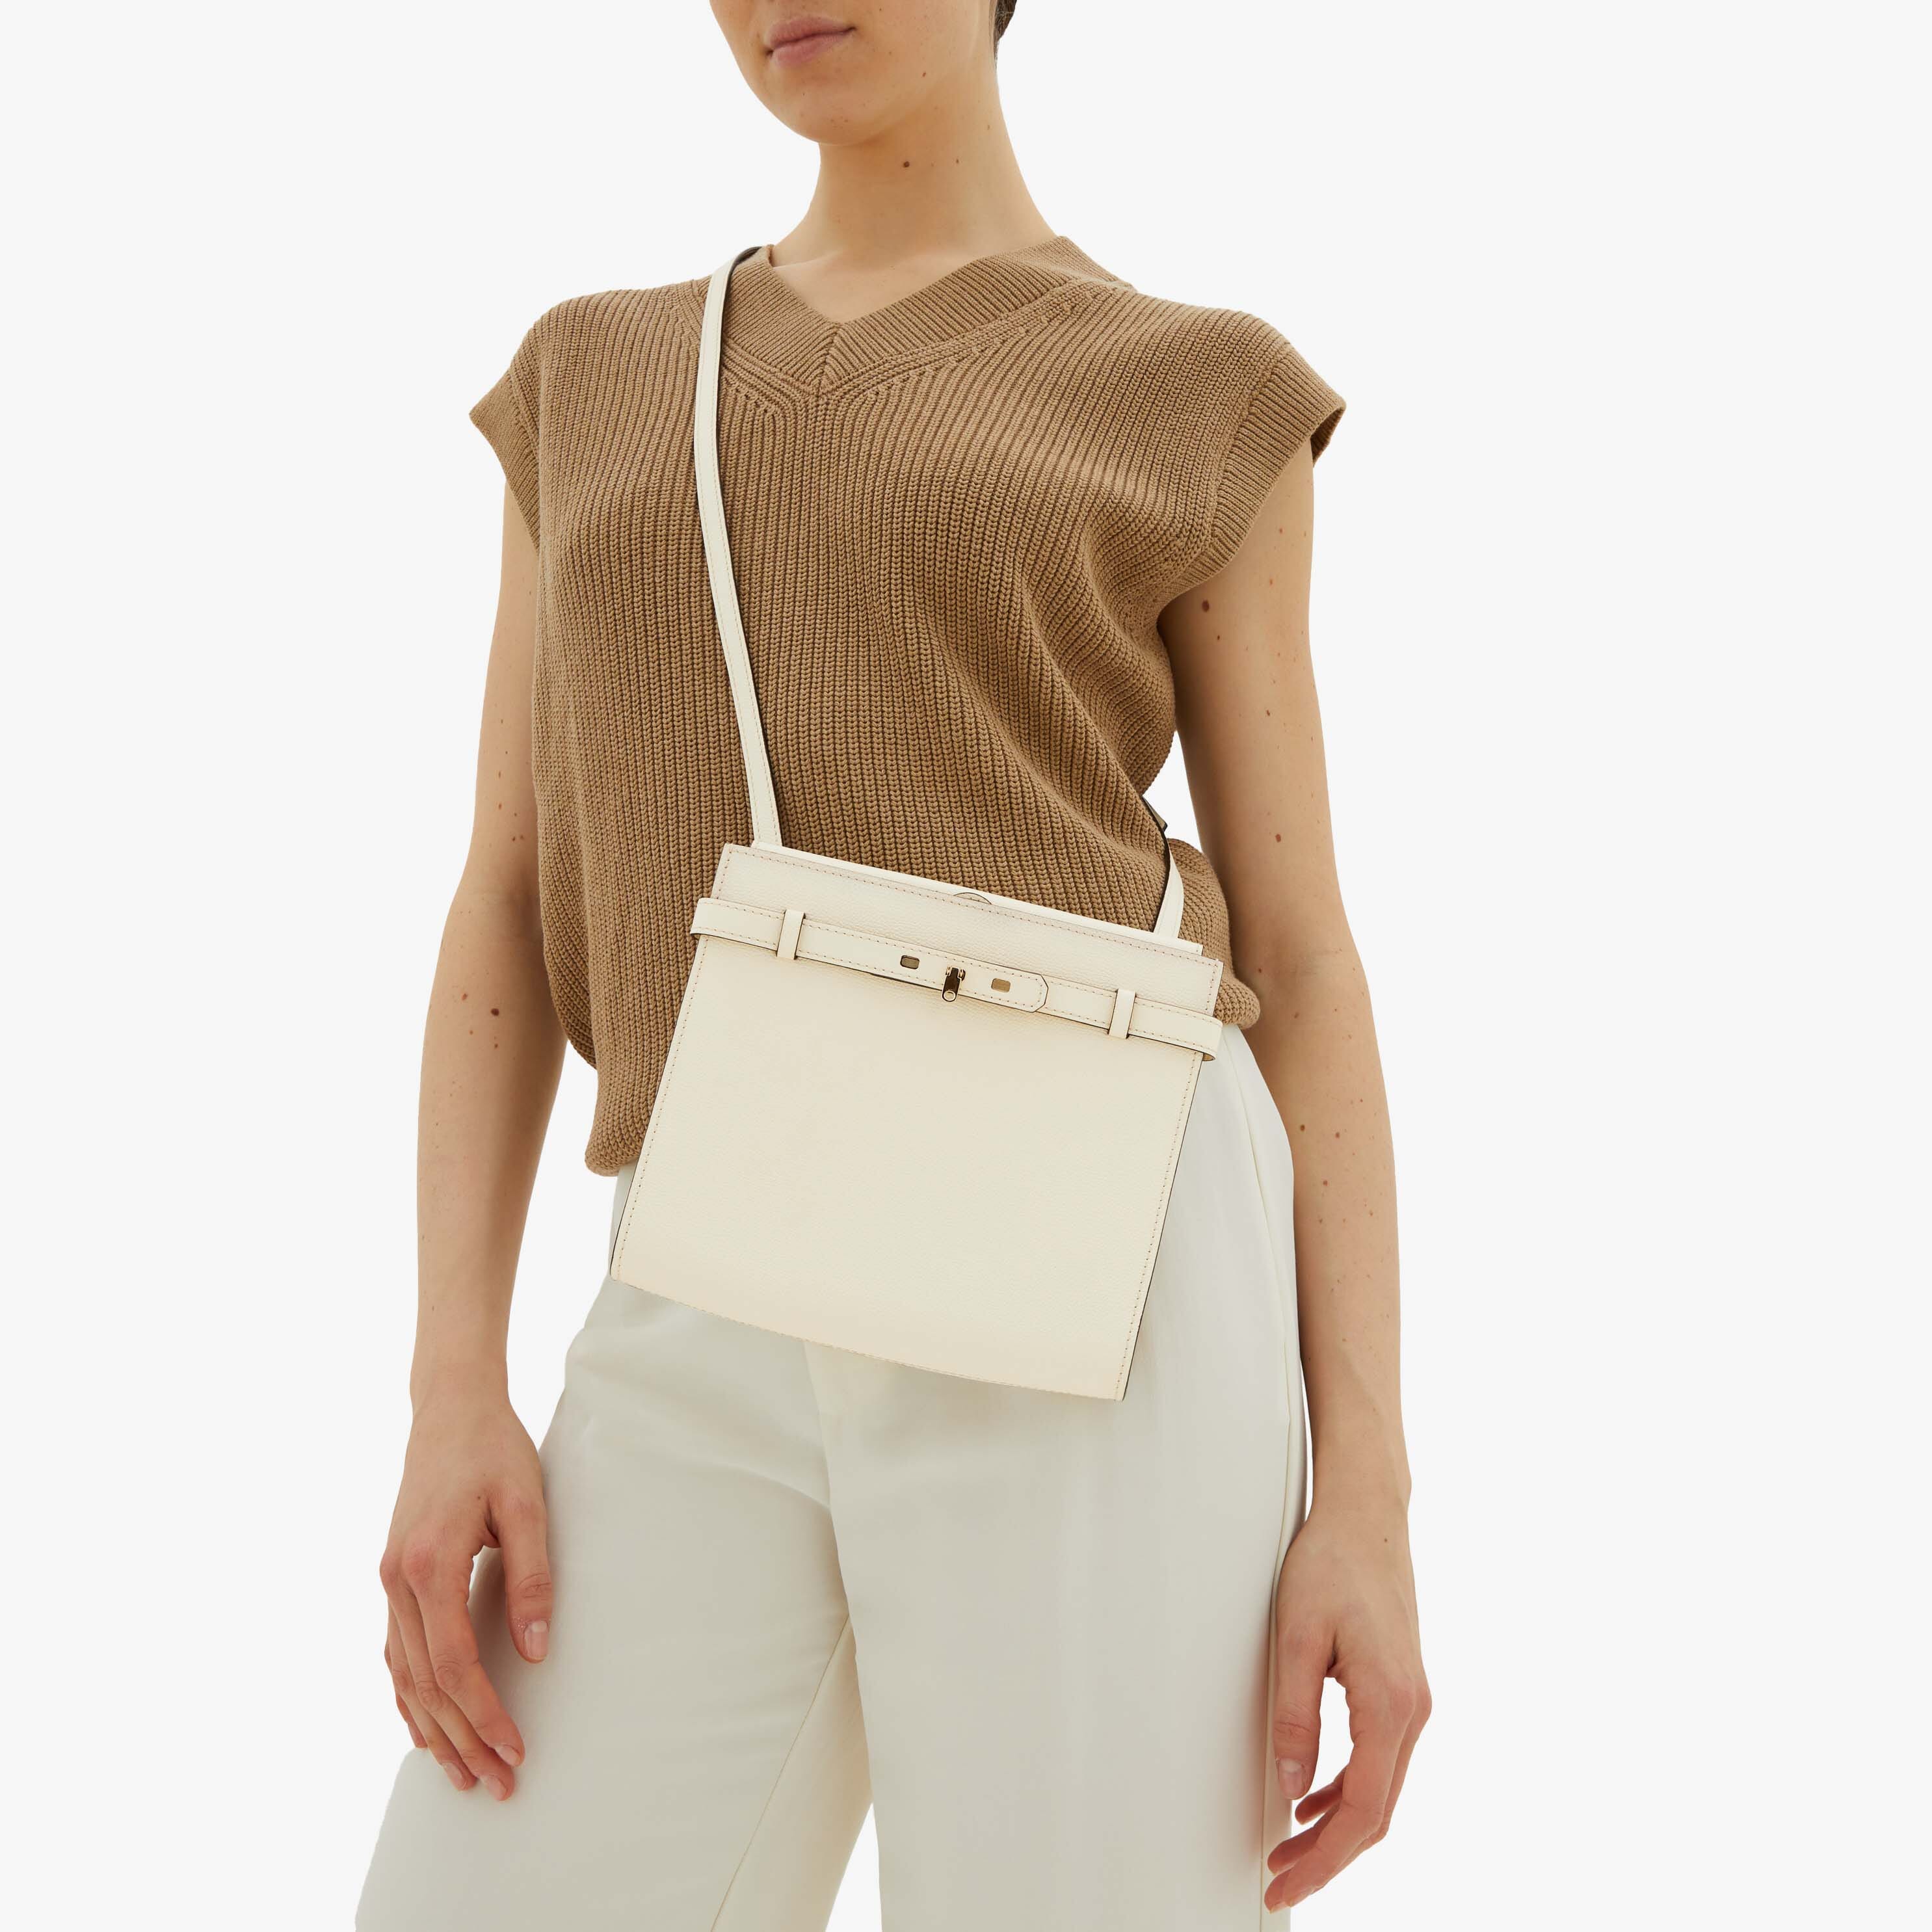 Brera crossbody purses, shoulder bags, mini bags | Valextra